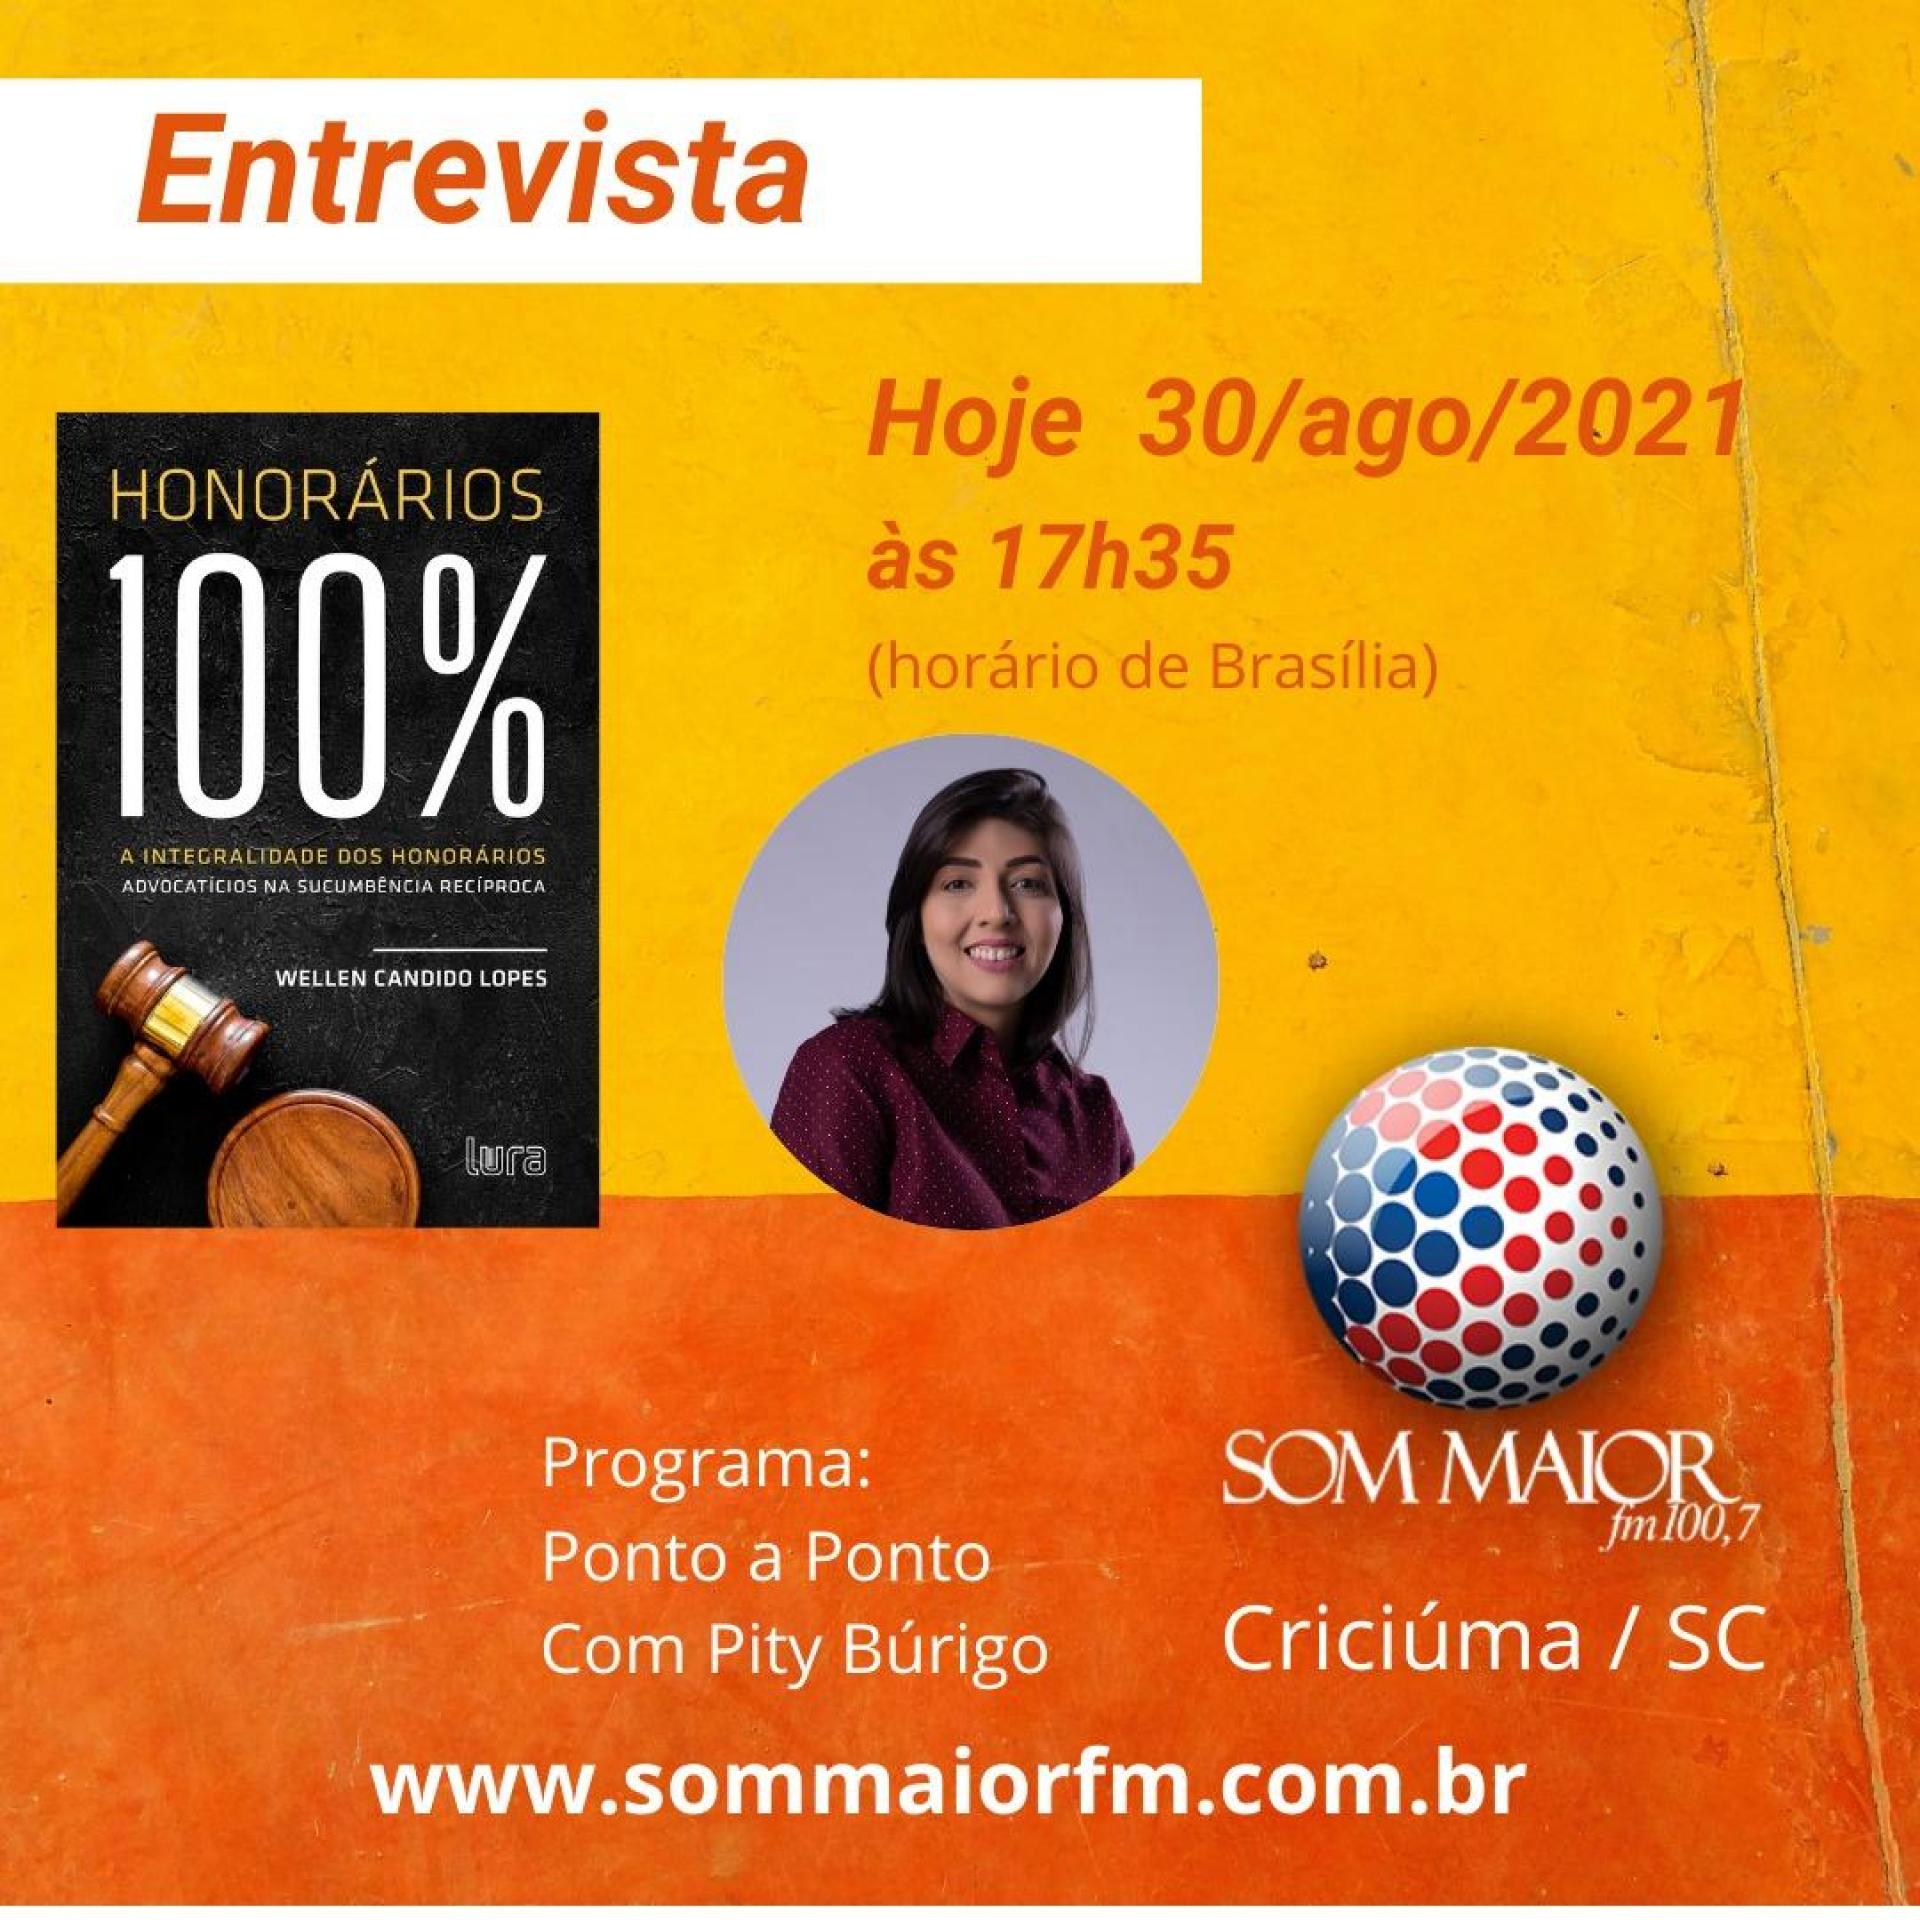 Entrevista+FM+Som+Maior+-+Santa+Catarina